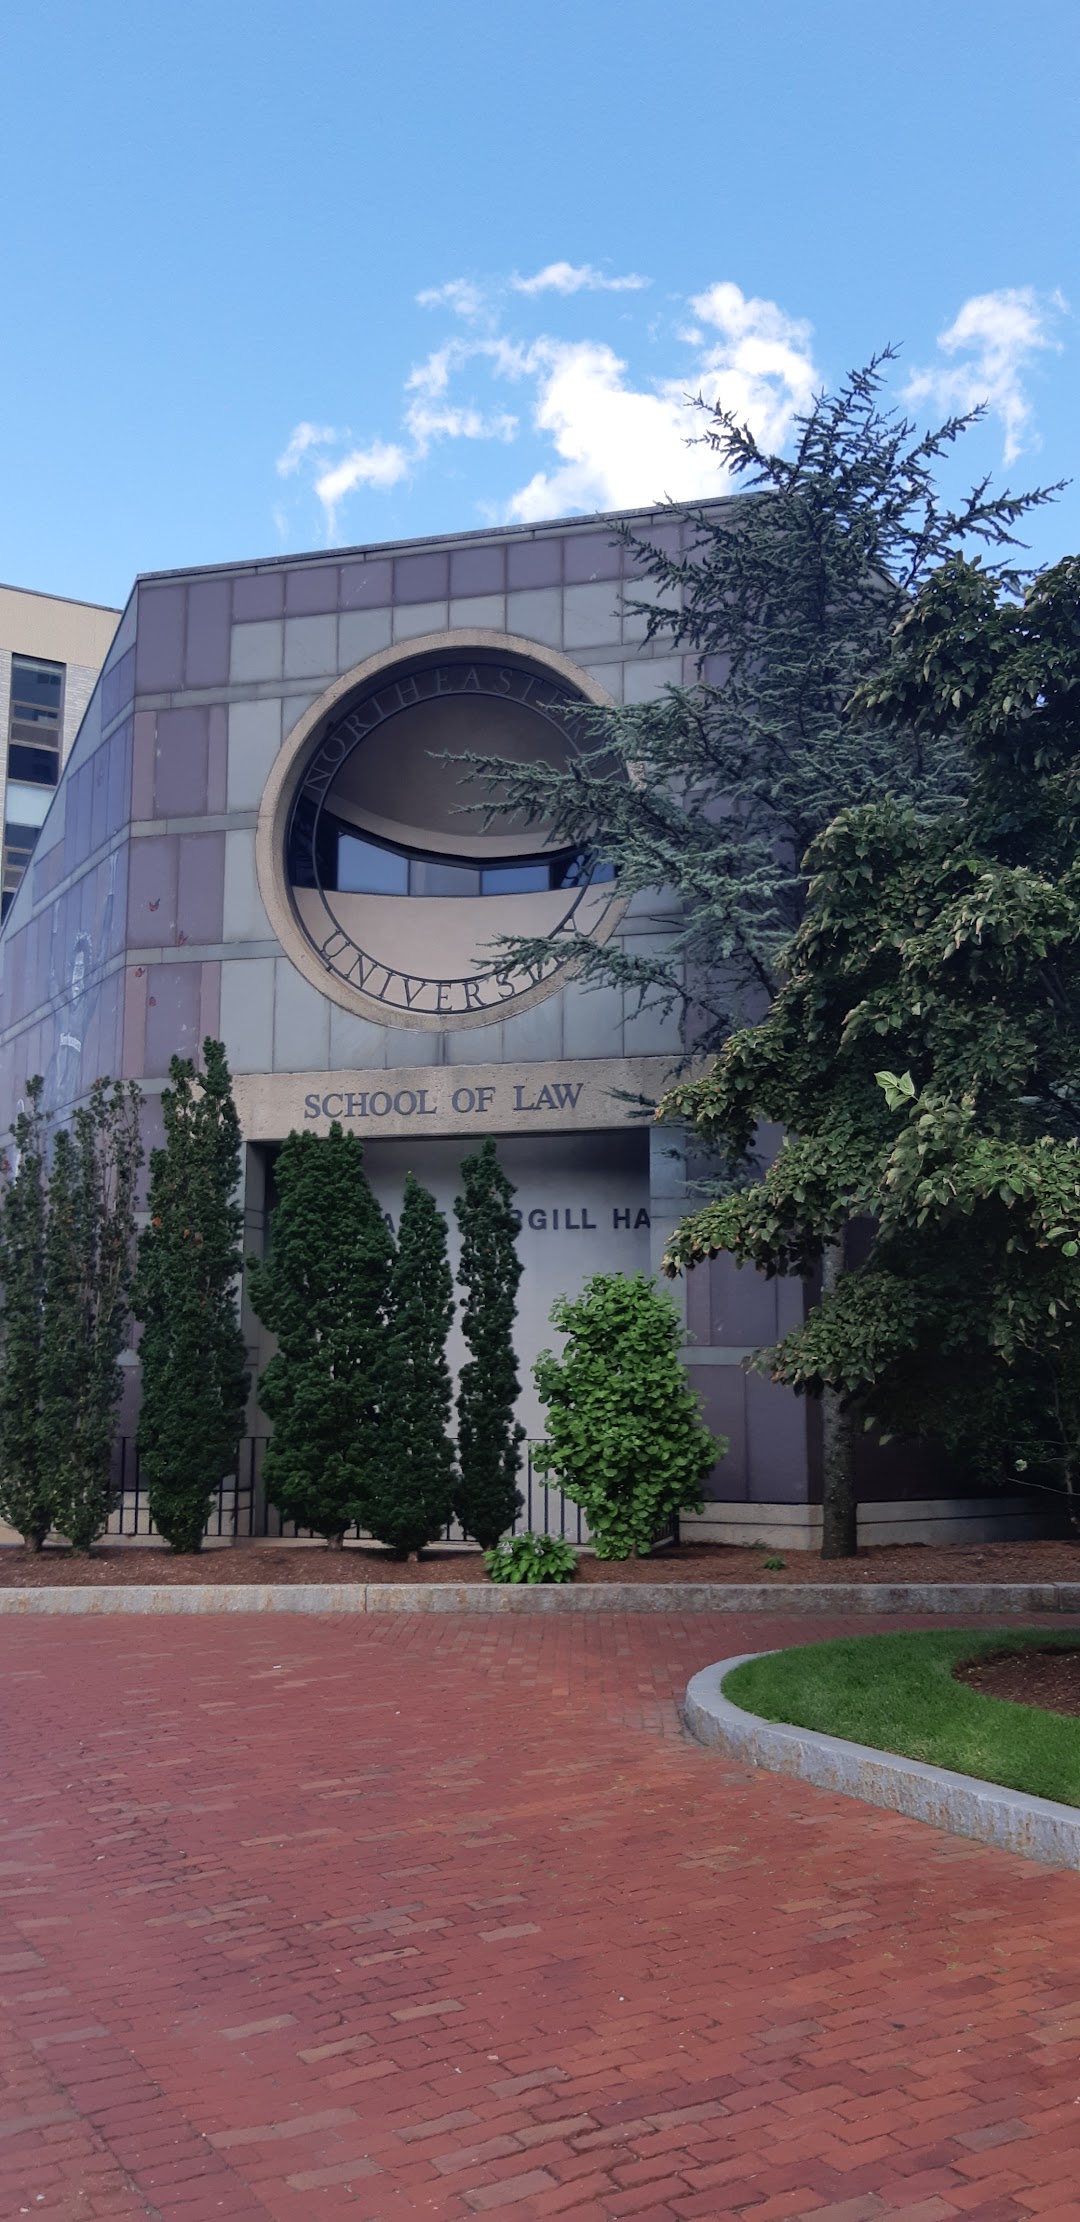 Northeastern University School of Law